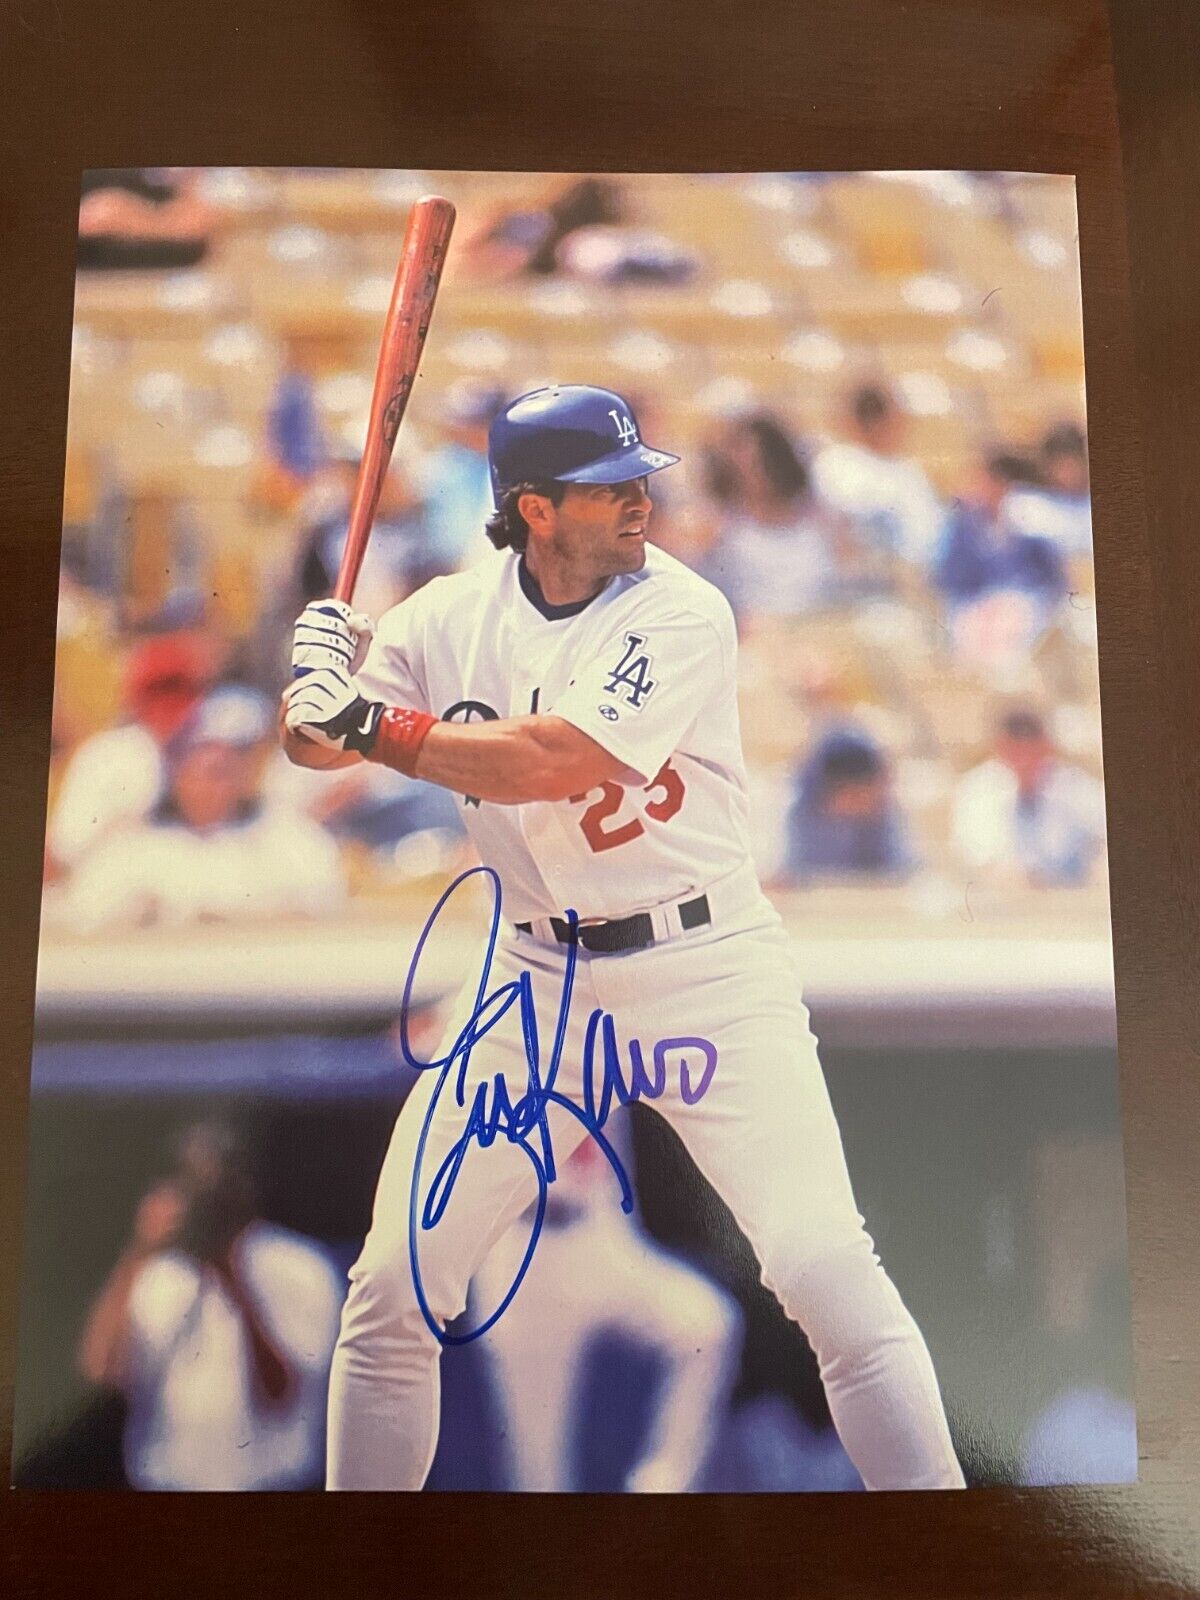 Eric Karros Authentic Signed Autographed 8x10 Photo - Los Angeles Dodgers